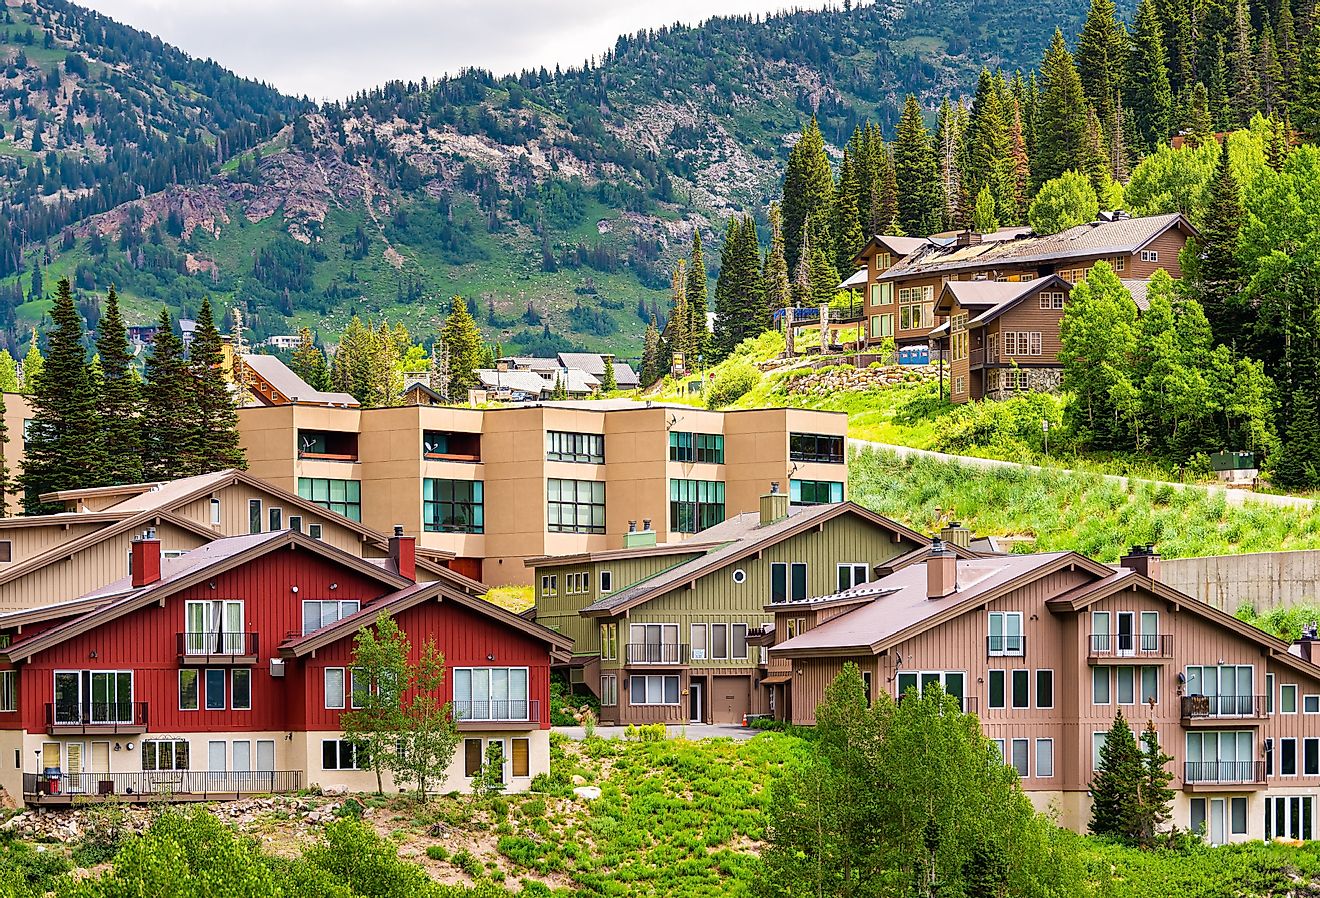 The ski resort village of Alta, Utah. Image credit Andriy Blokhin via Shutterstock